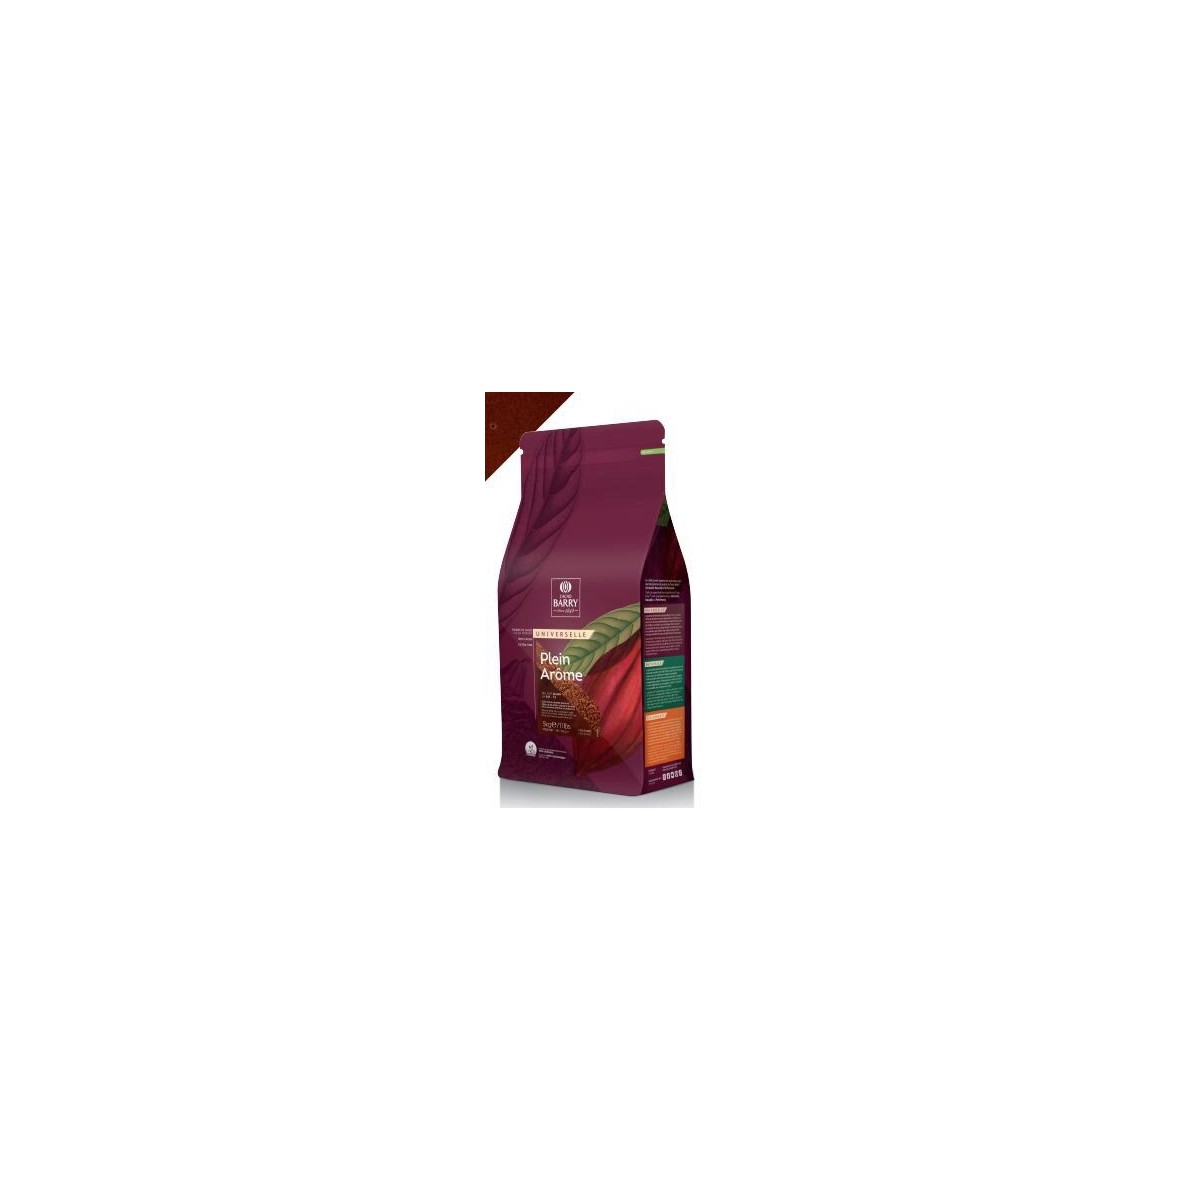 Poudre de cacao 22-24% 1kg DCP-22PLARO-E0-89B (EX CP-776)